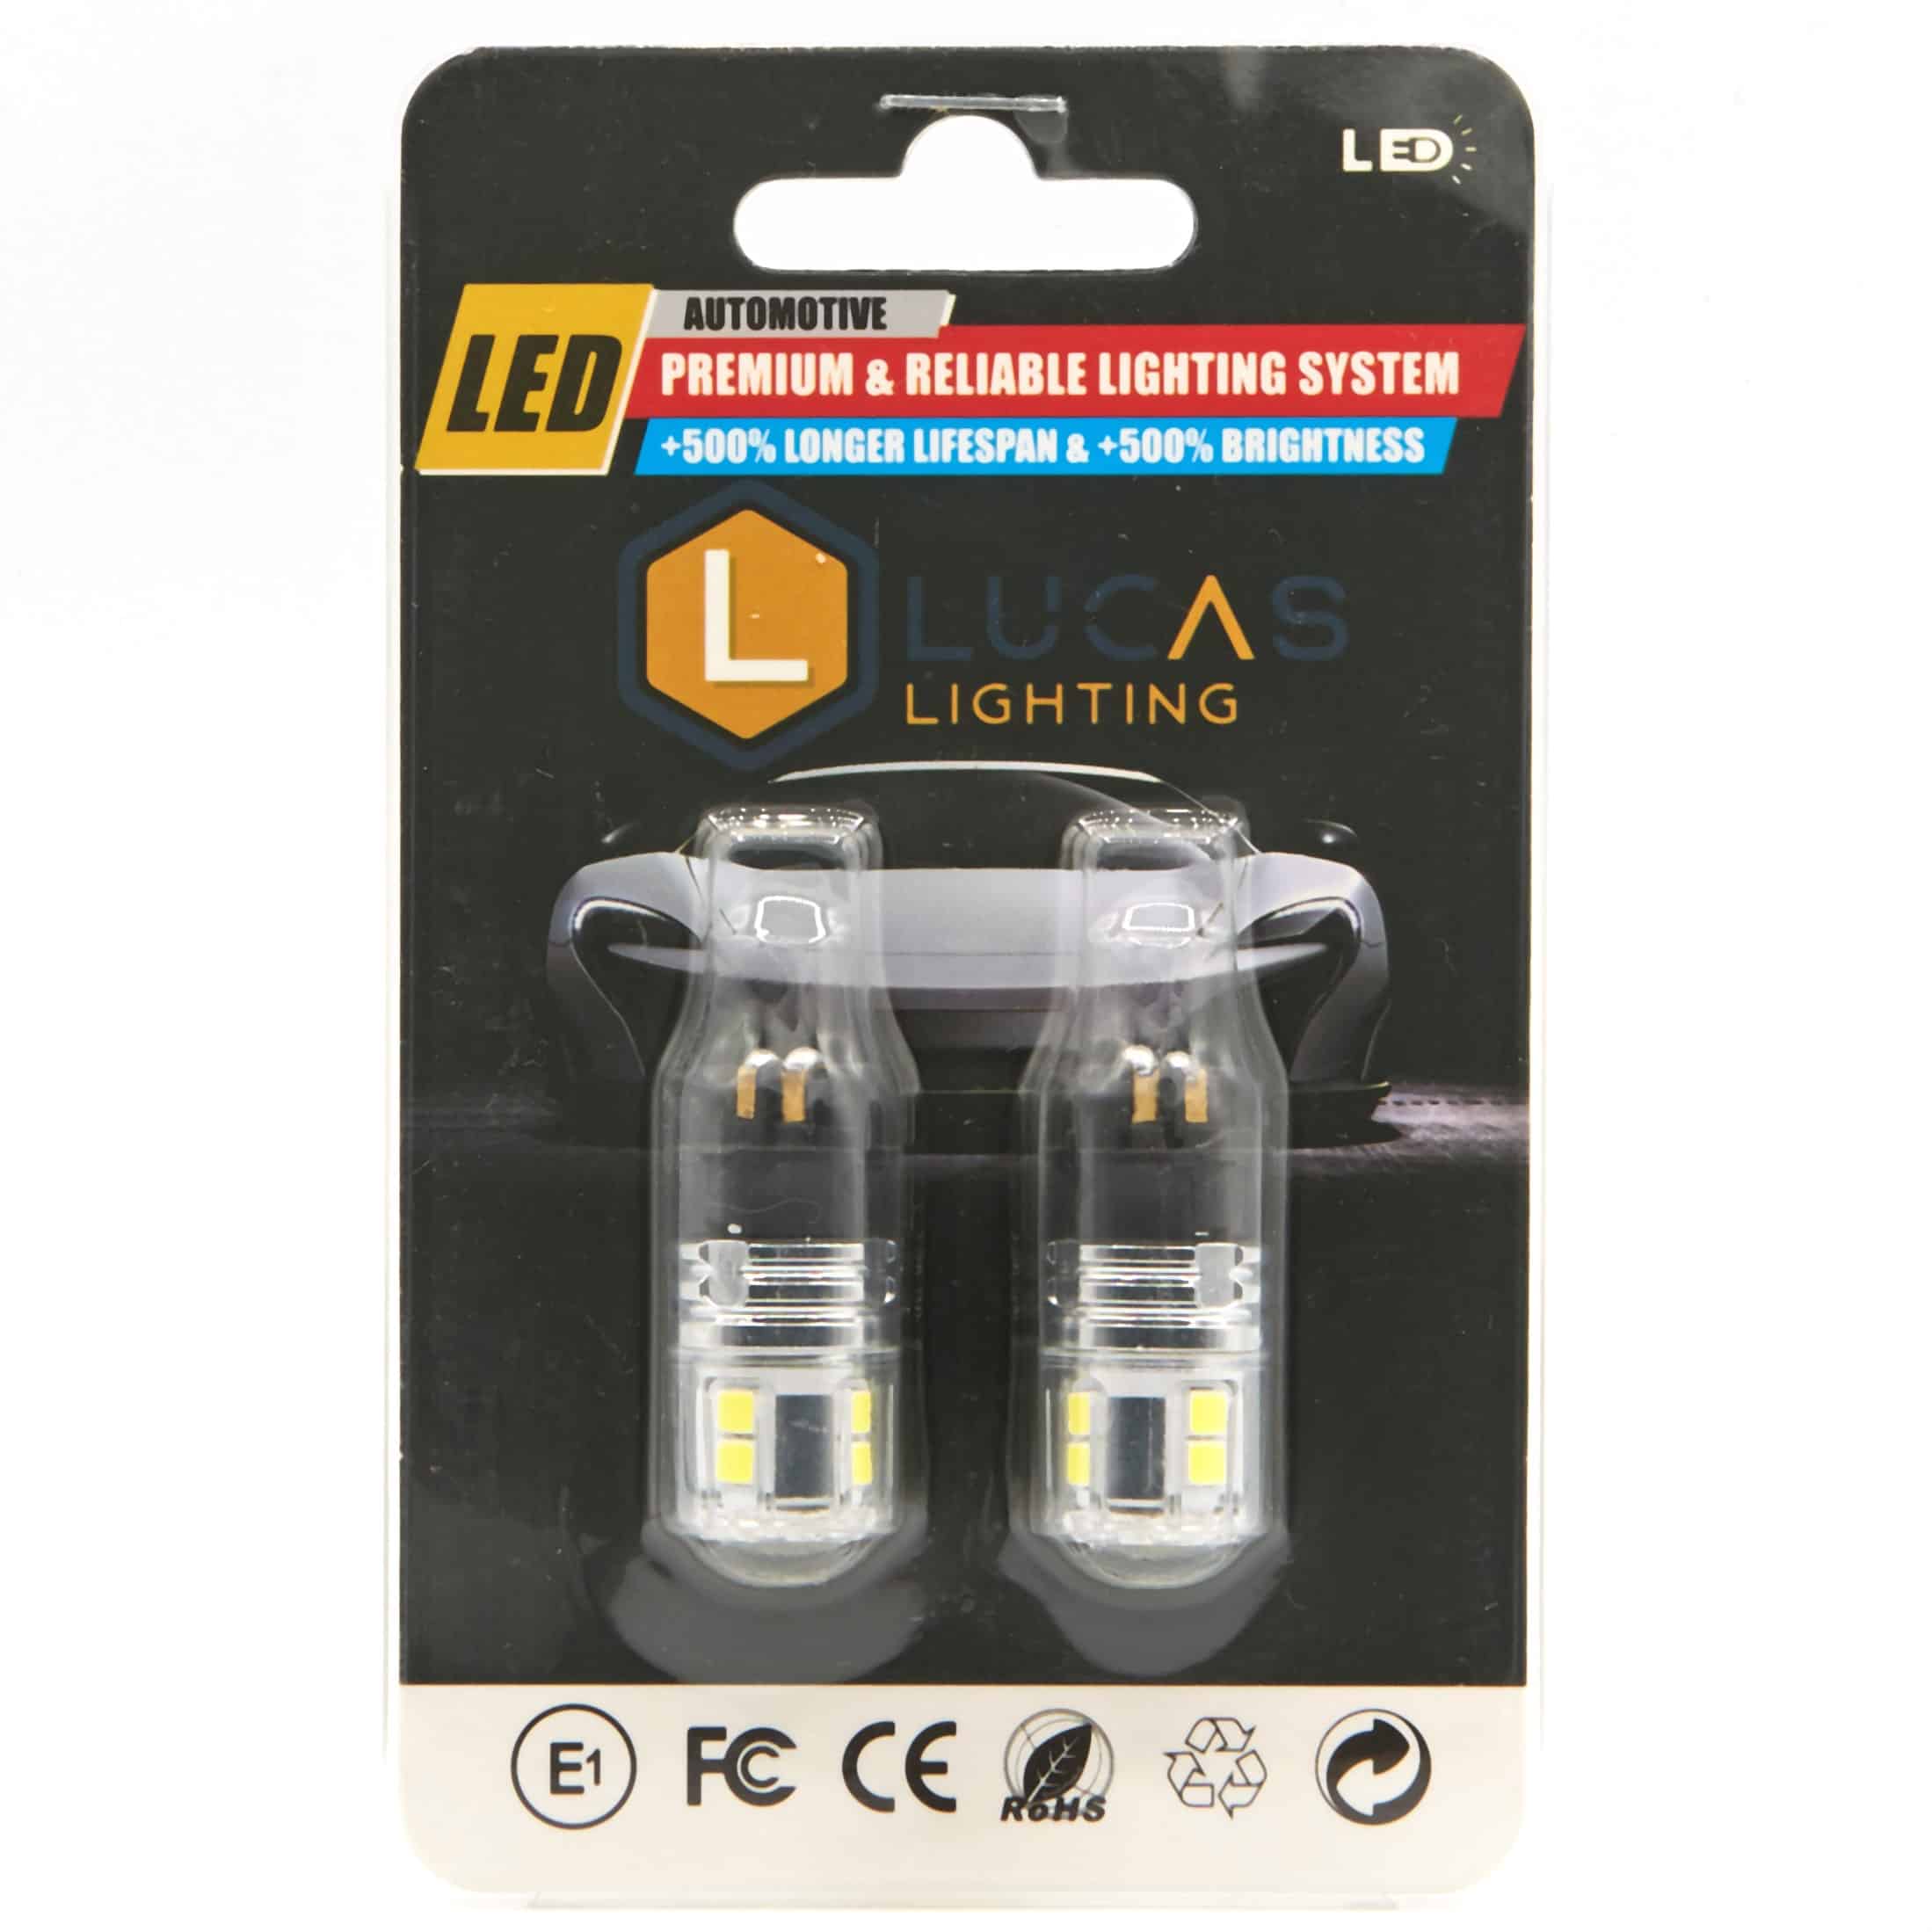 Lucas Lighting,PW24 12 LED Bulb (White) - For BMW DRL